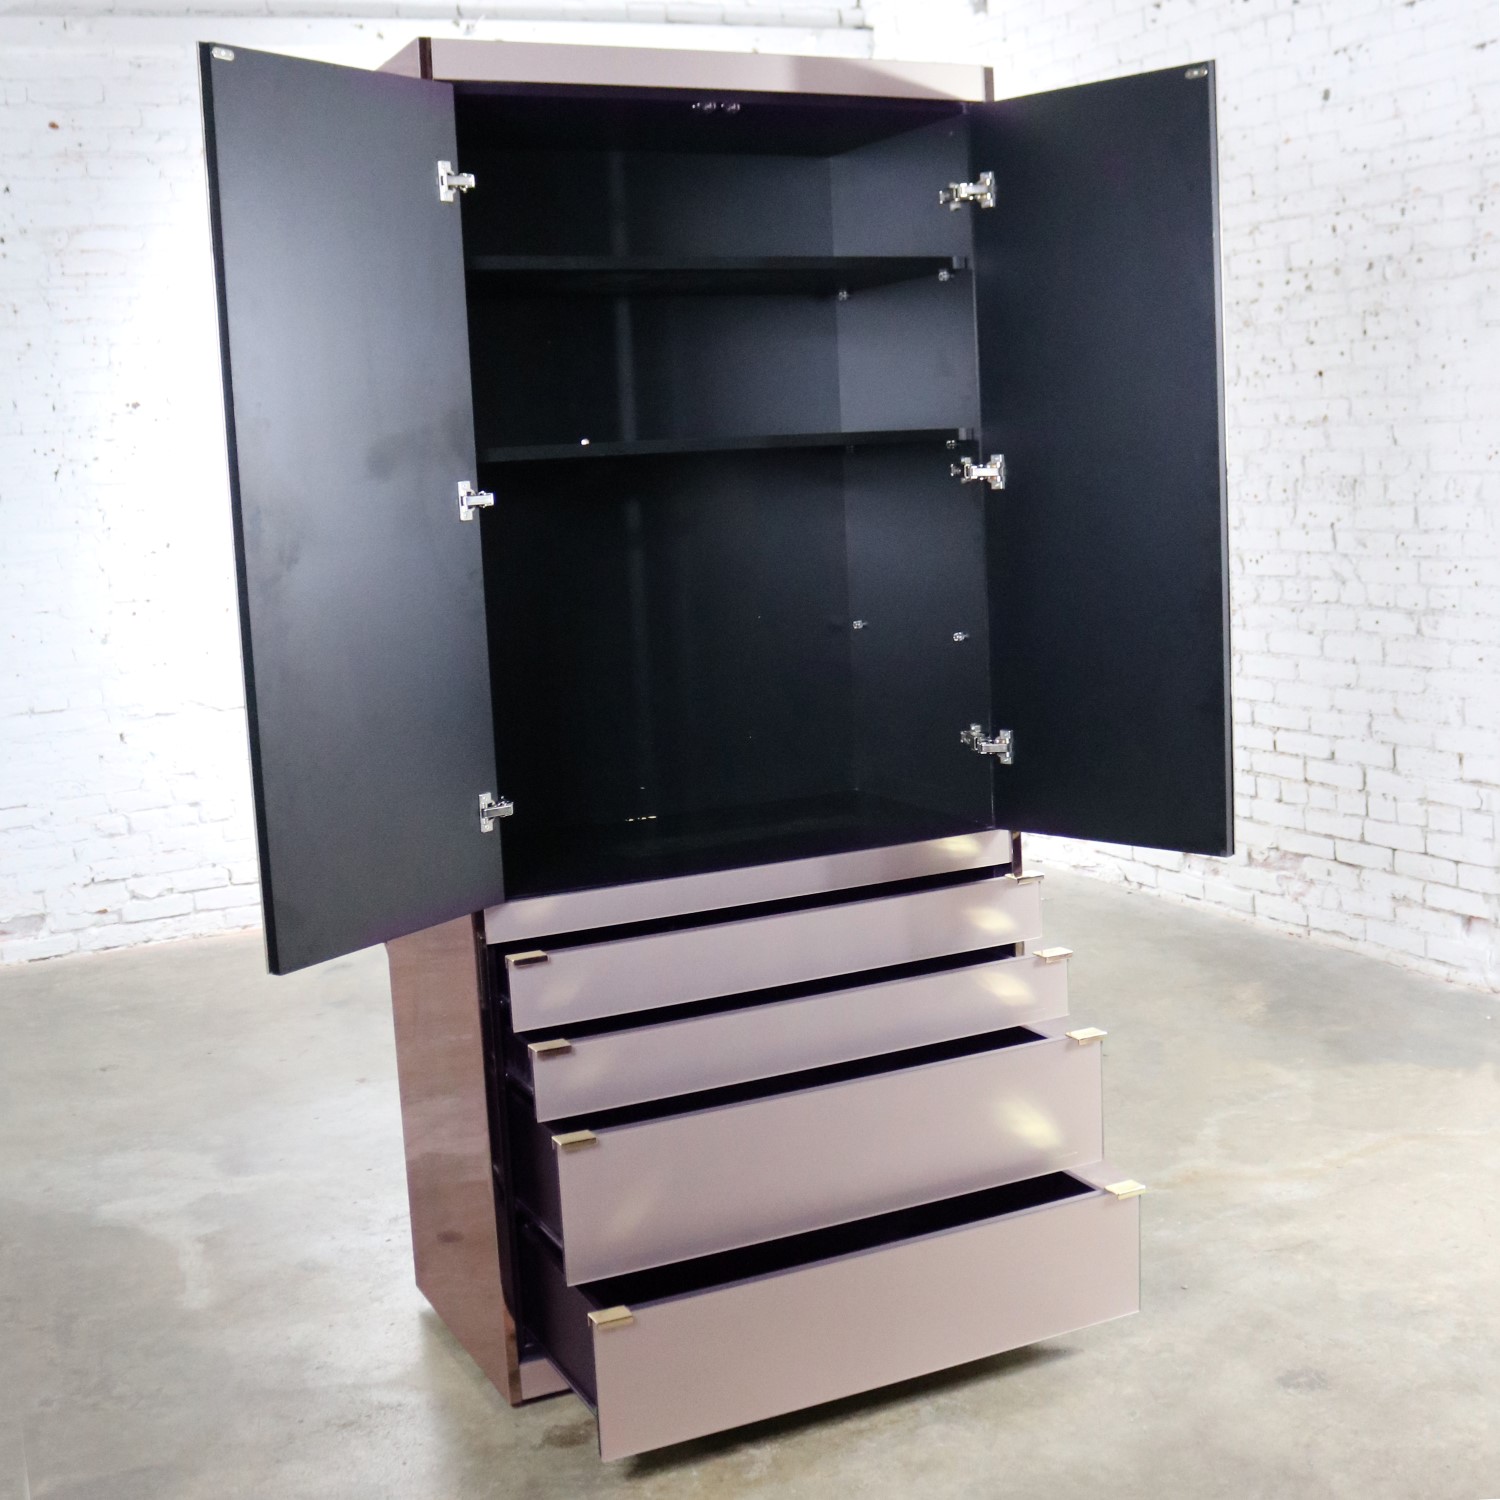 Ello Optima Brass and Rose Gray Glass Wardrobe Entertainment Storage Cabinet